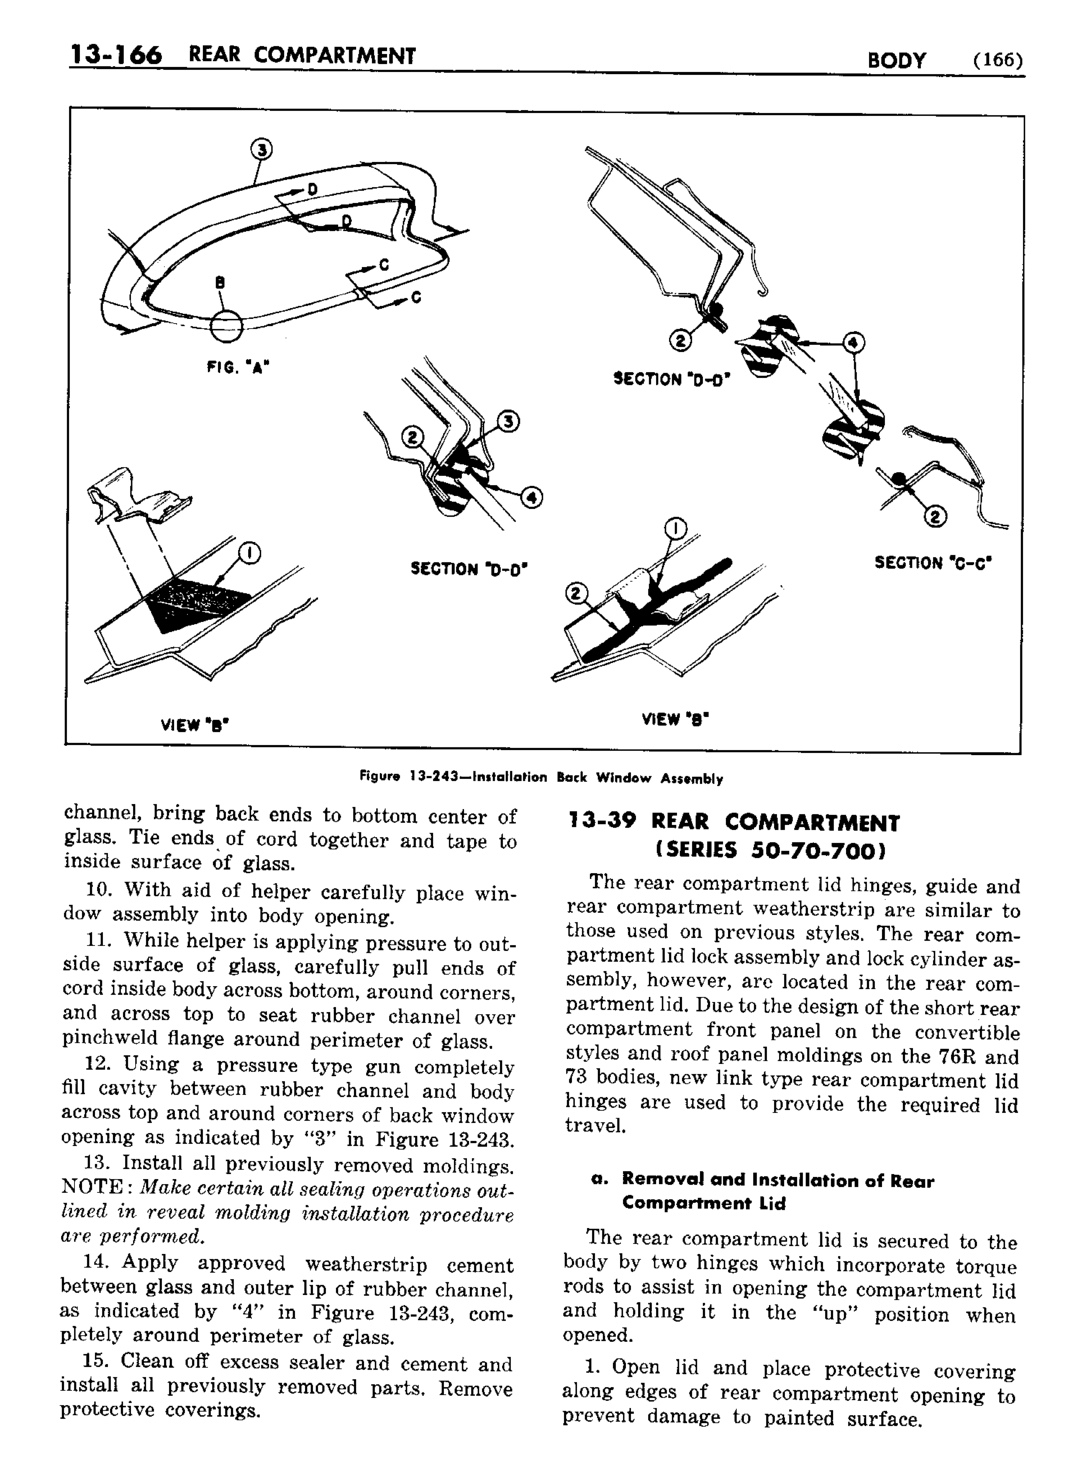 n_1958 Buick Body Service Manual-167-167.jpg